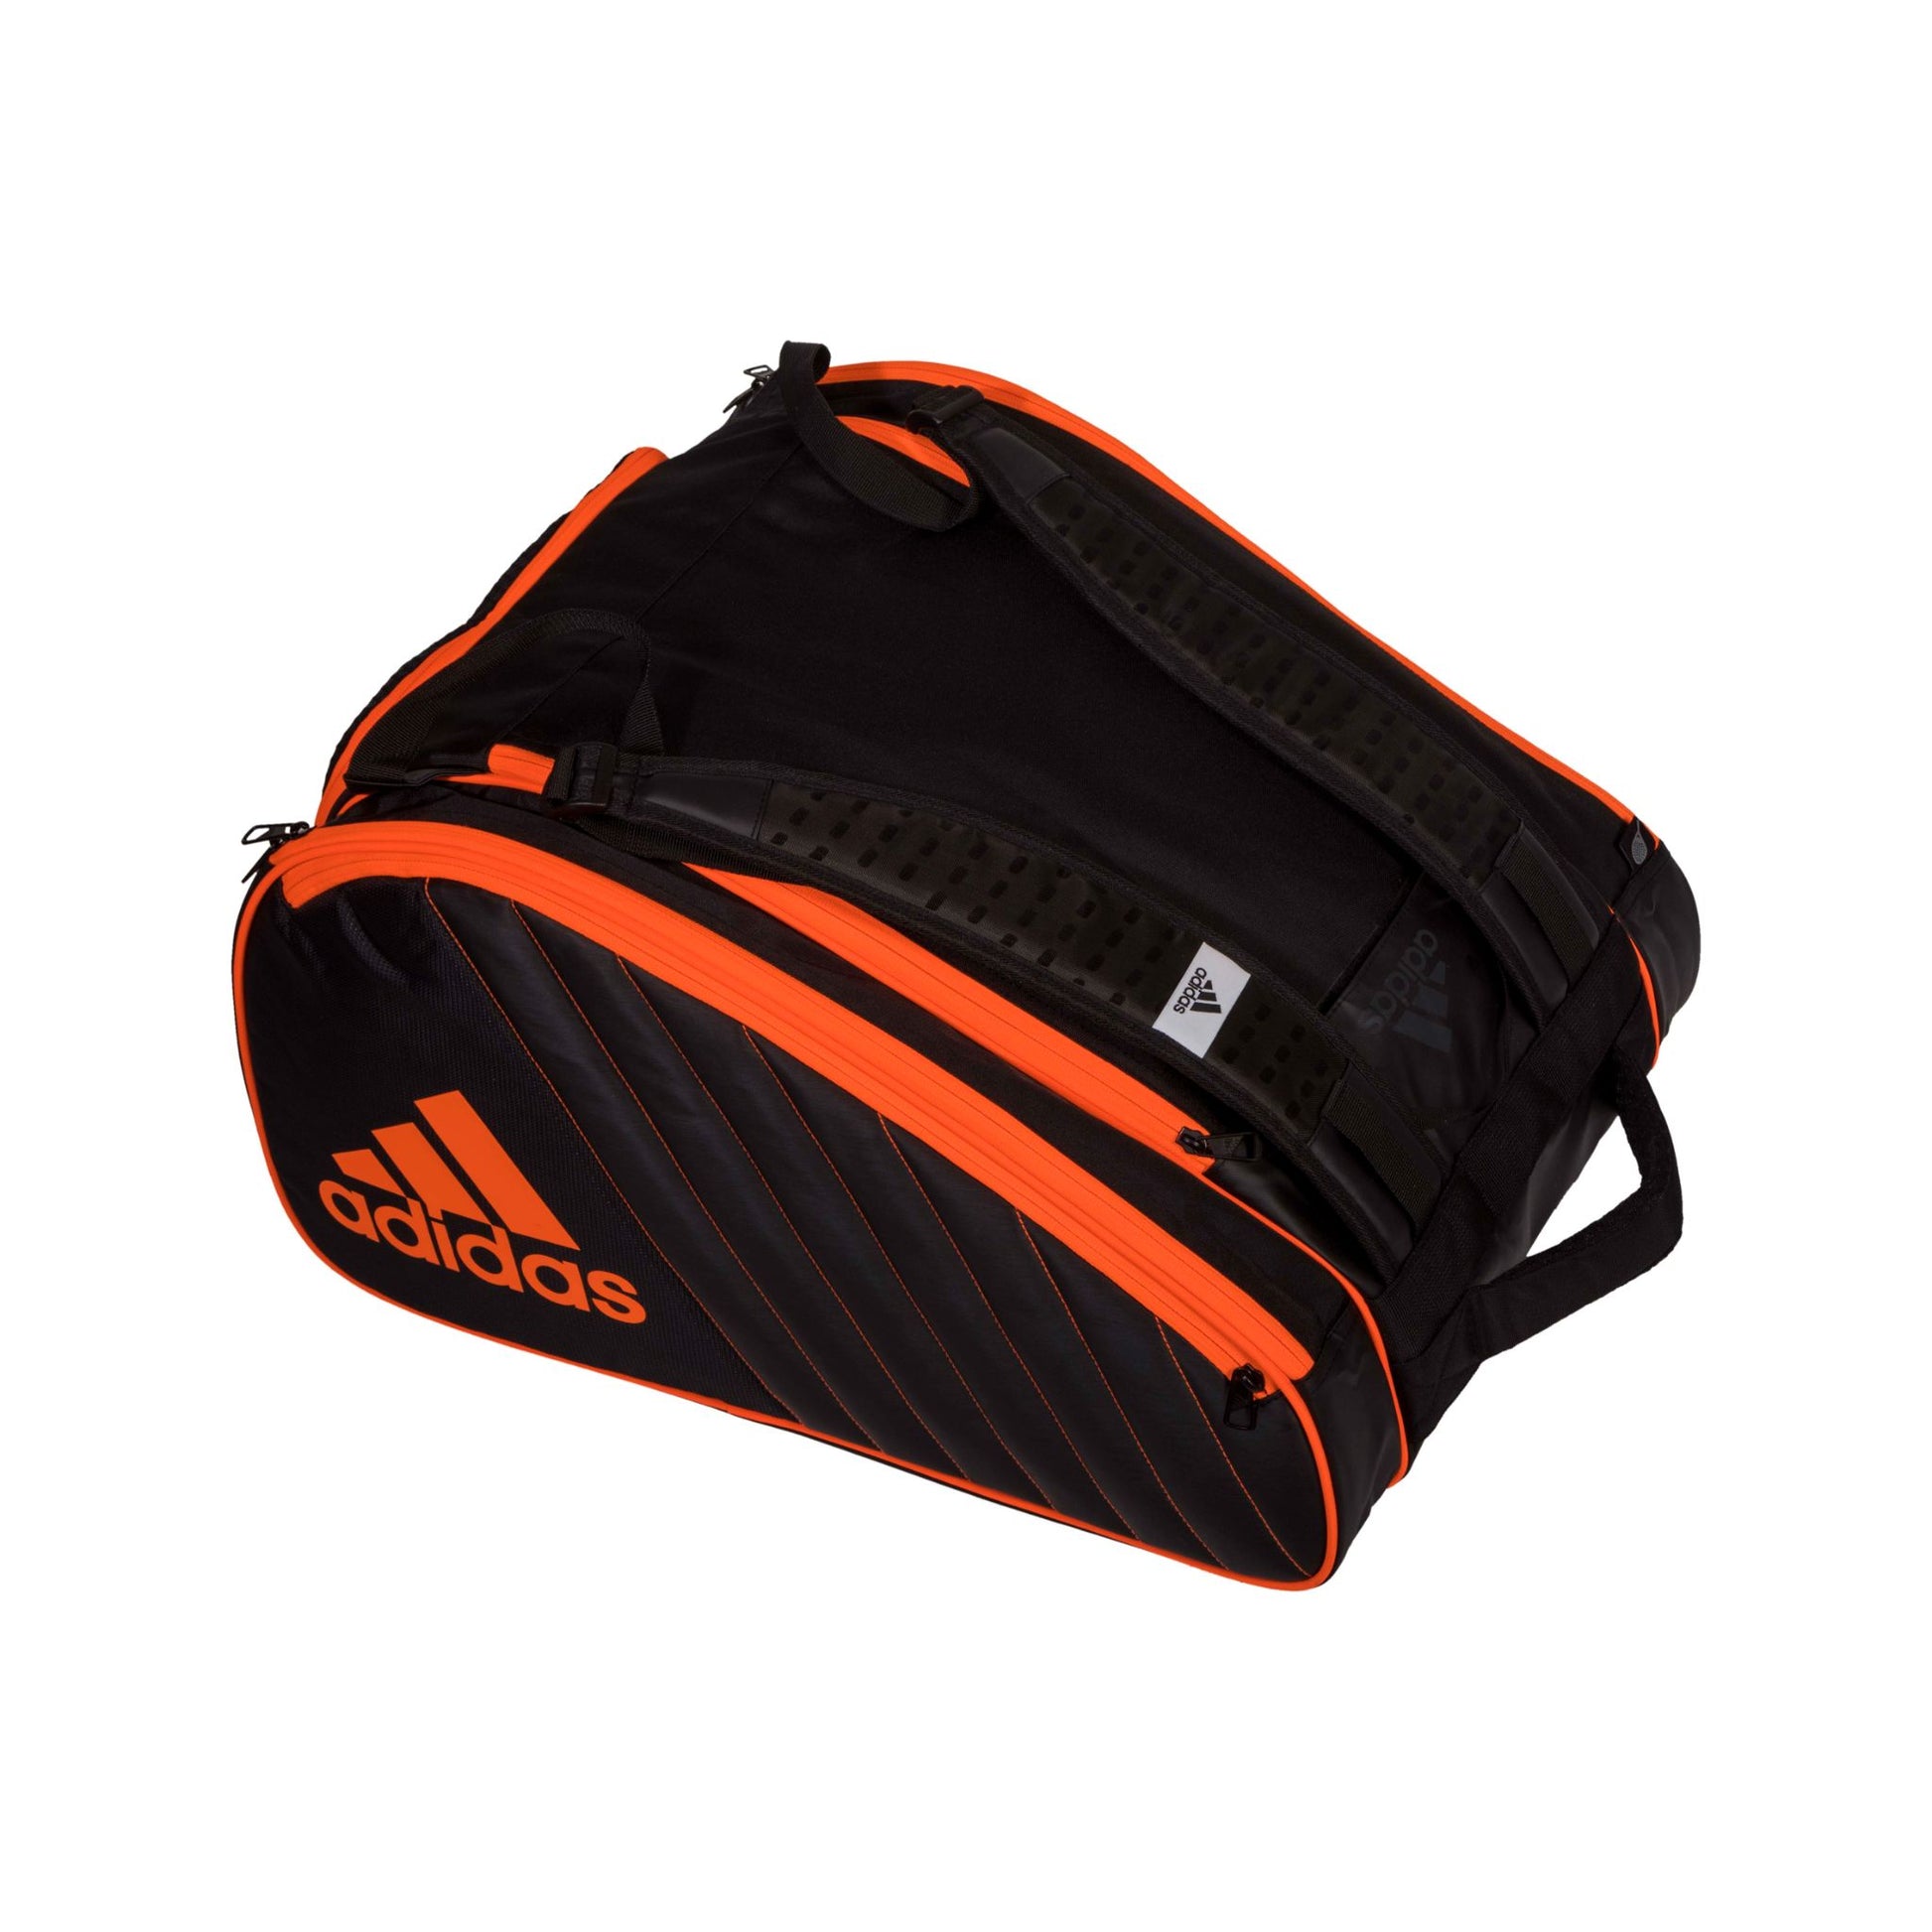 Adidas Protour Racket Bag - Orange-Right